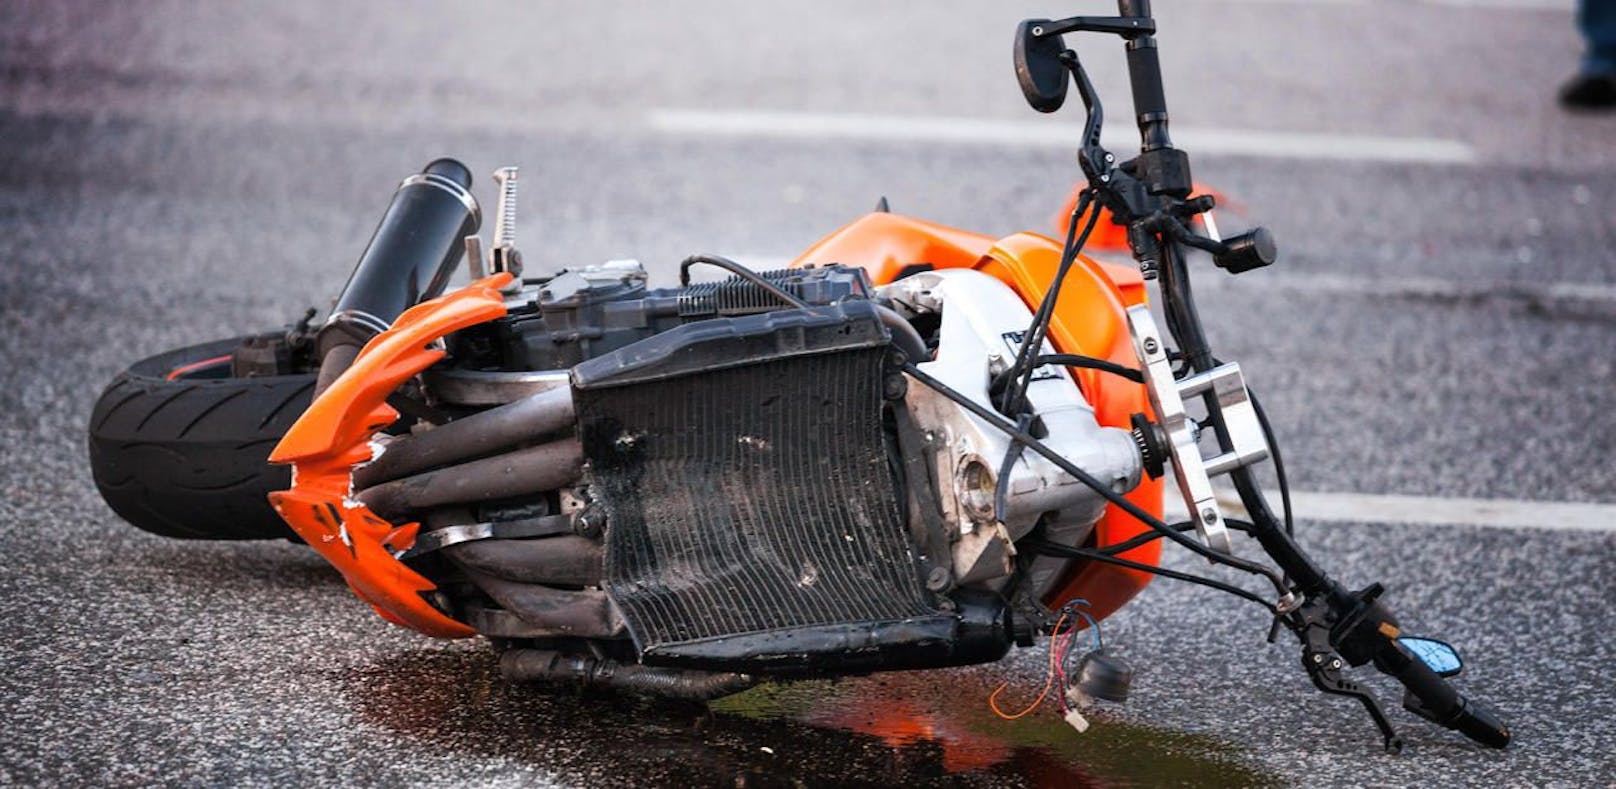 Der Biker erlitt bei dem Unfall lebensgefährliche Verletzungen.